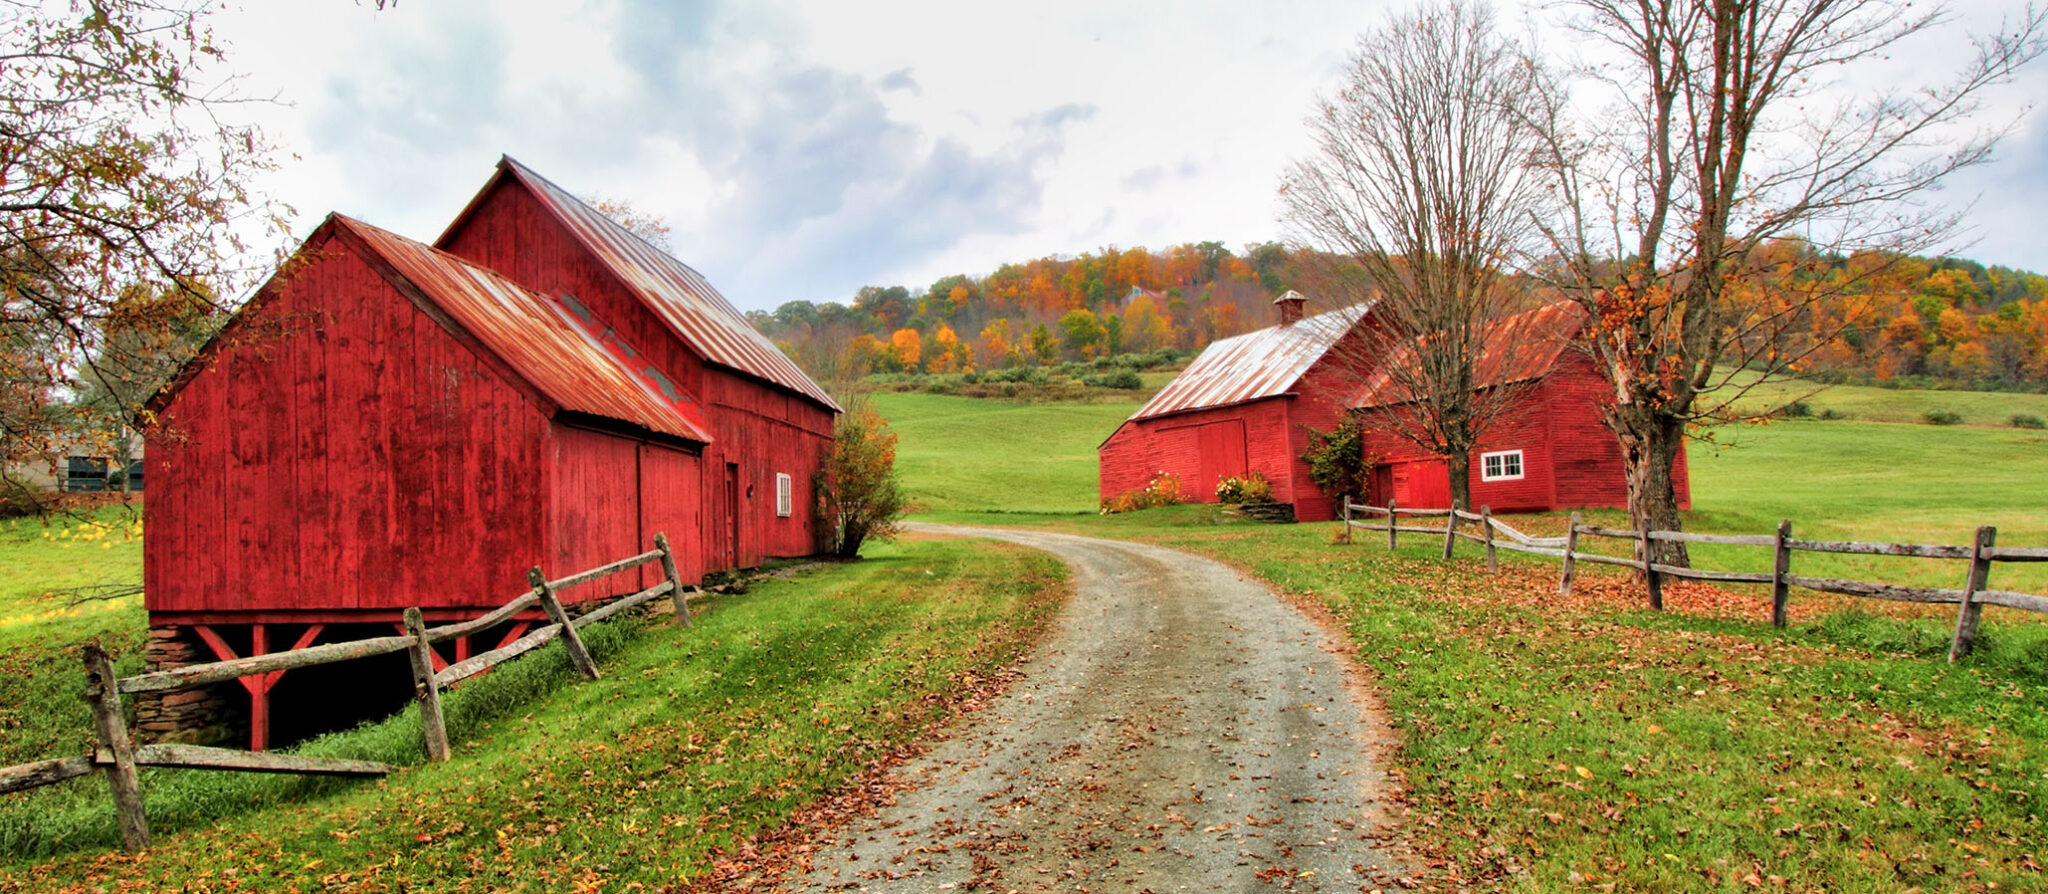 Американская ферма осенью. Старая ферма осень. Ферма осенью фото. Midwest Farm autumn. Farm road